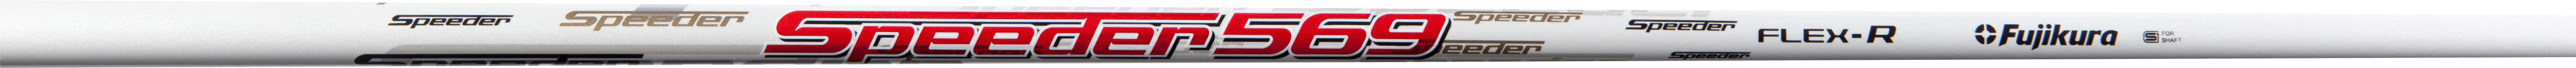 Motore Speeder 569 | Fujikura Golf